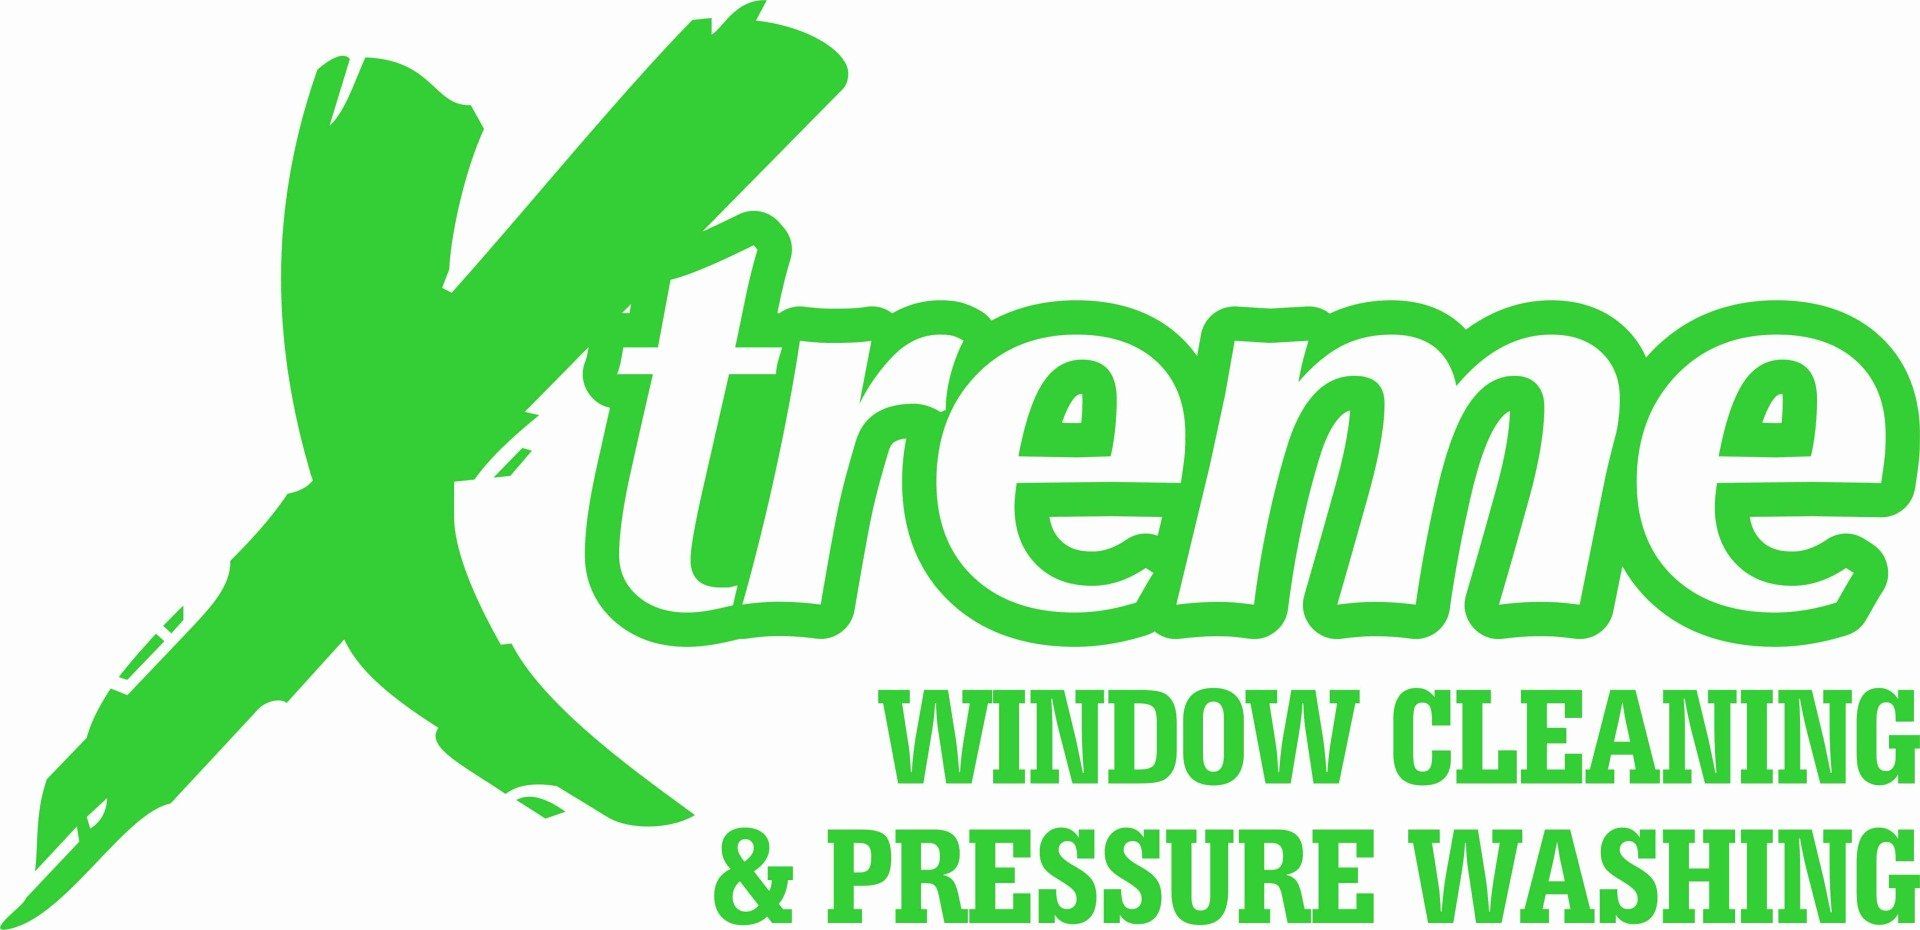 Xtreme Window Cleaning & Pressure Washing LLC